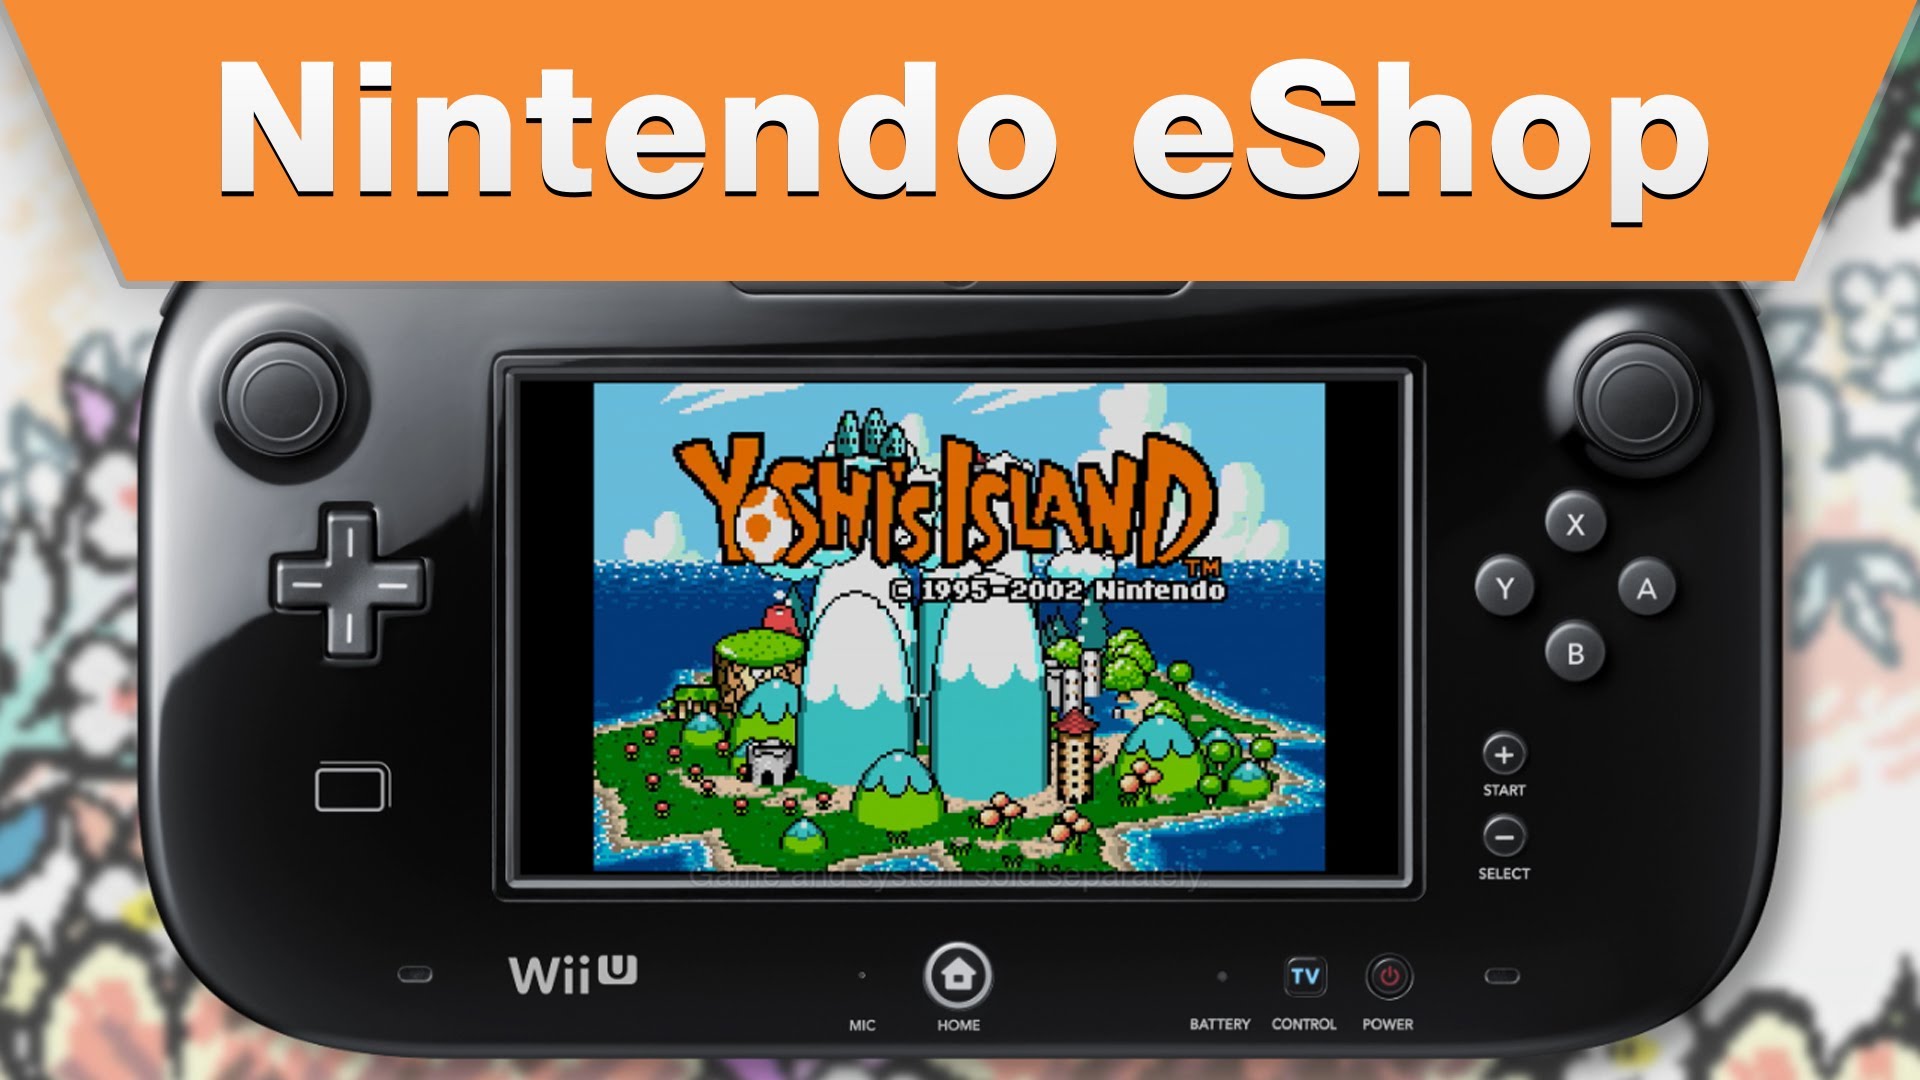 Super Mario Advance 3 - Yoshi's Island HD wallpapers, Desktop wallpaper - most viewed